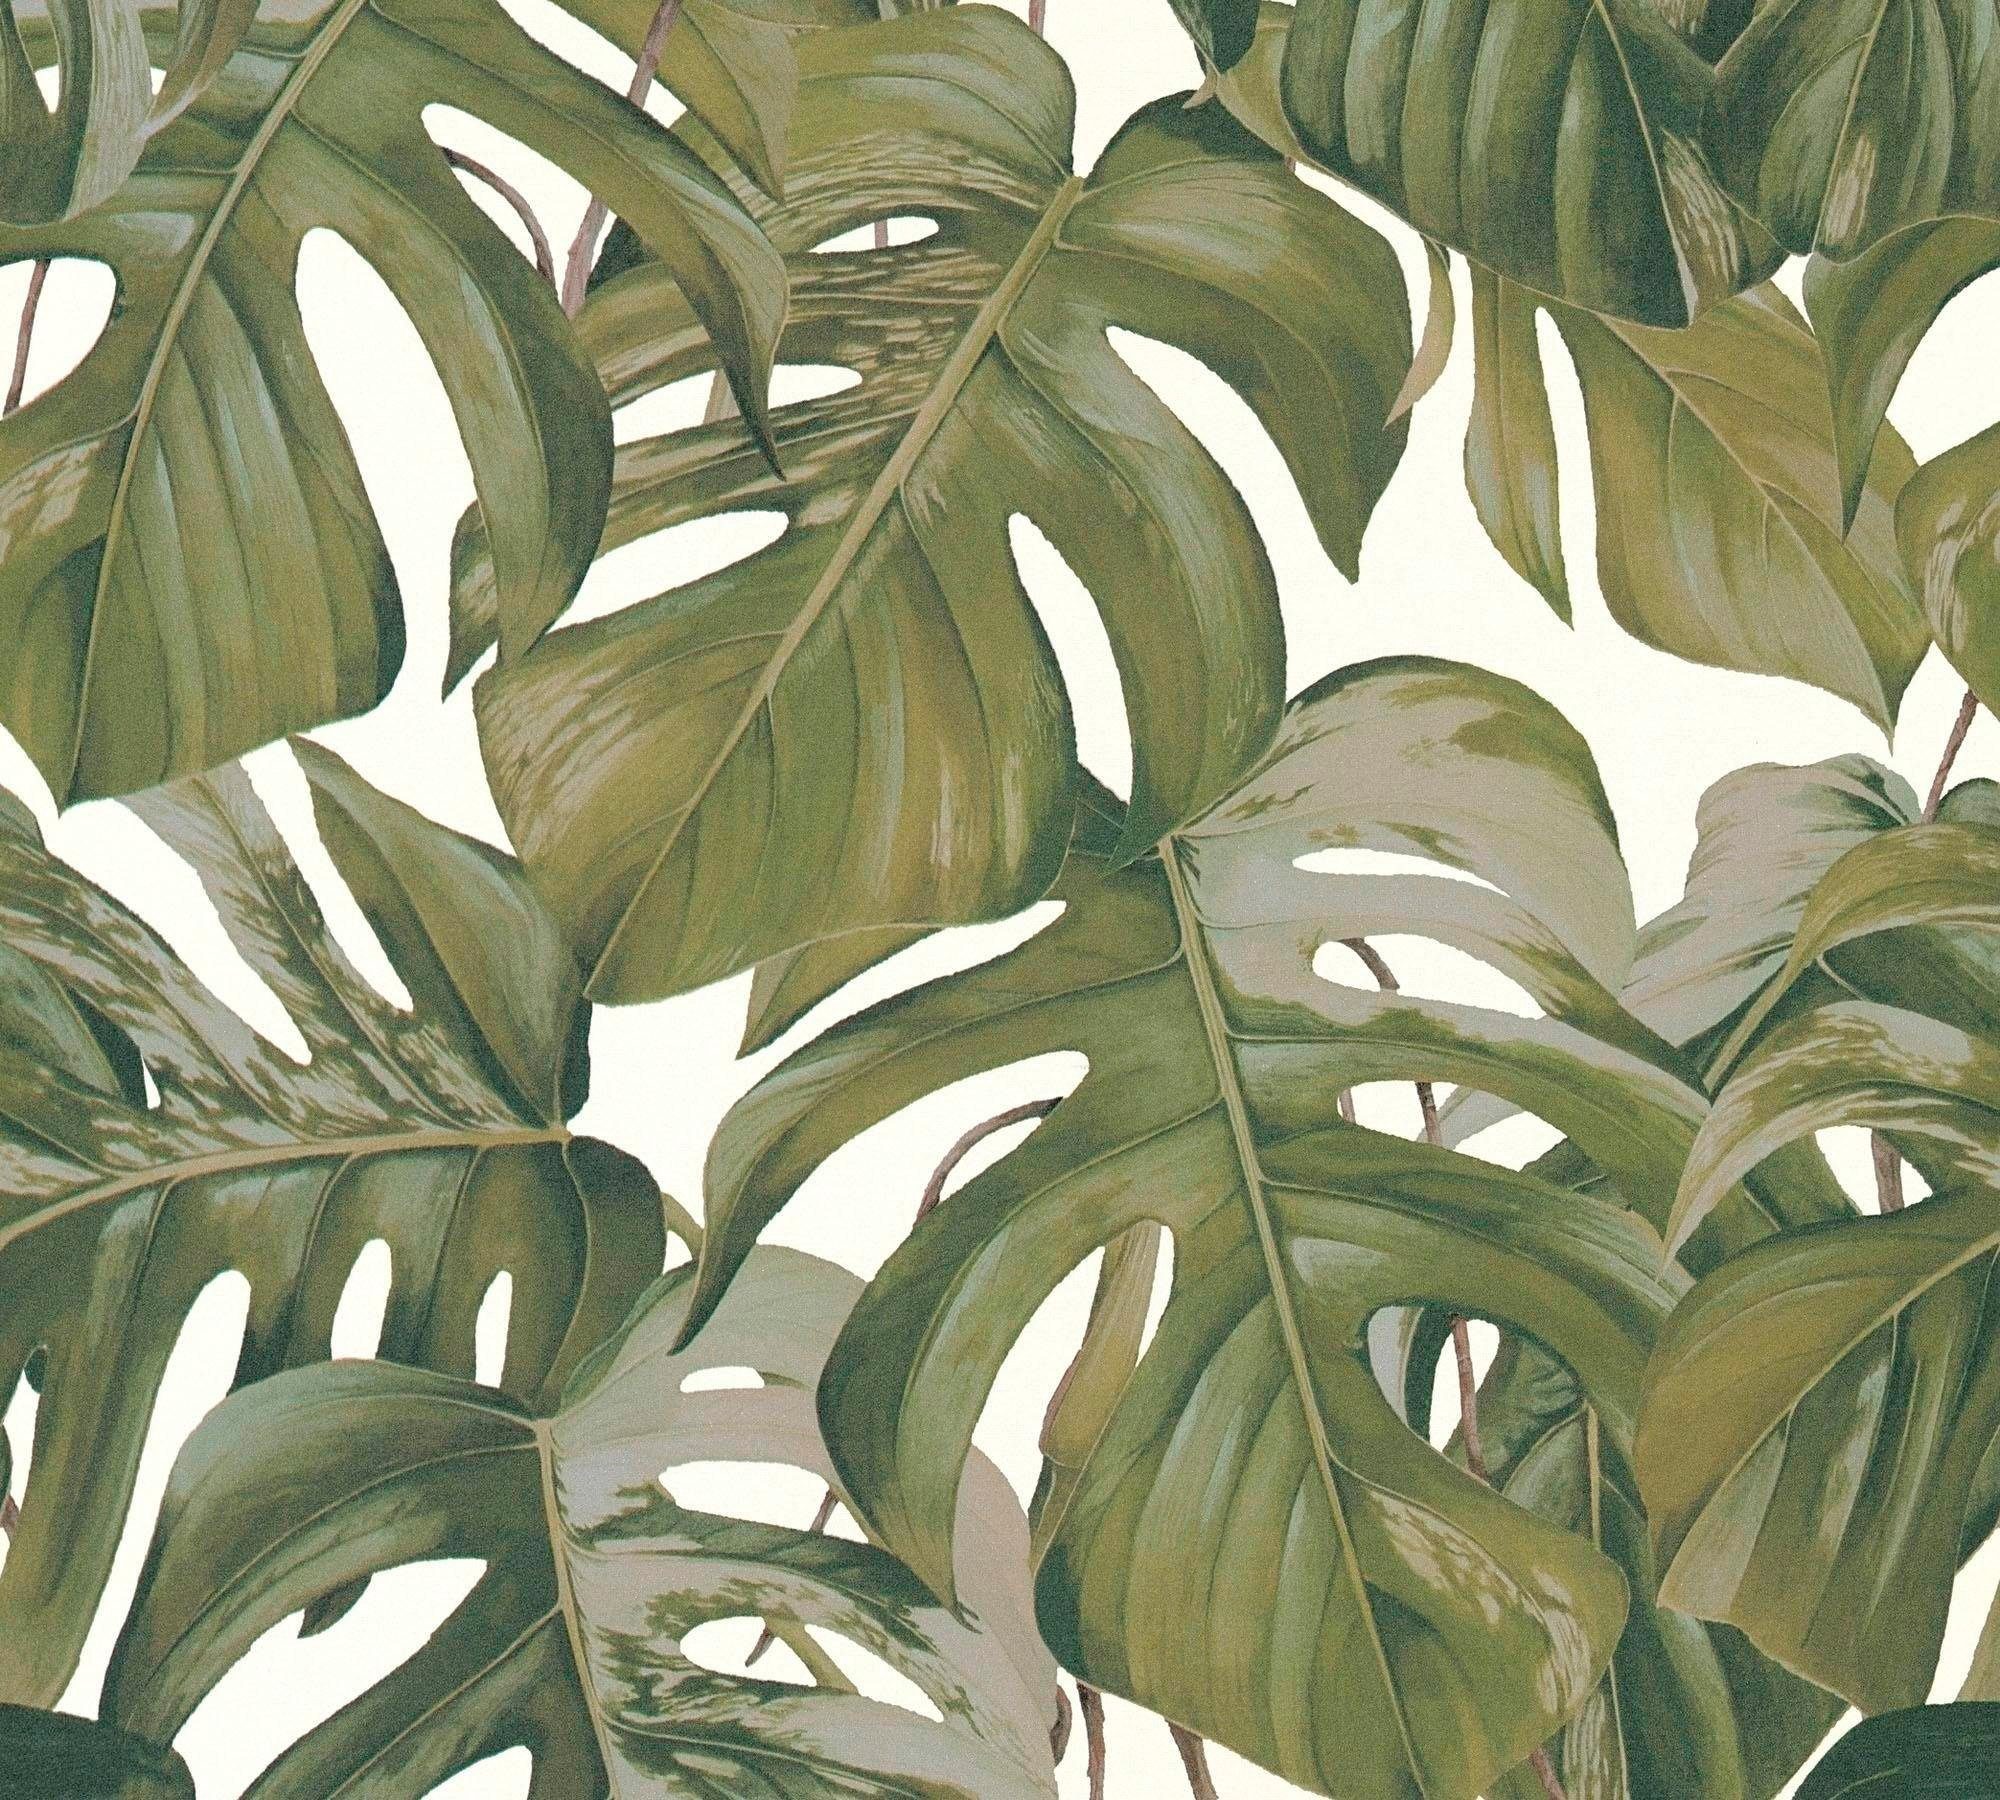 Dream dunkelgrün/weiß botanisch, BY Designer Modern Vliestapete LIVING MICHALSKY tropisch, Tapete METROPOLIS Again,